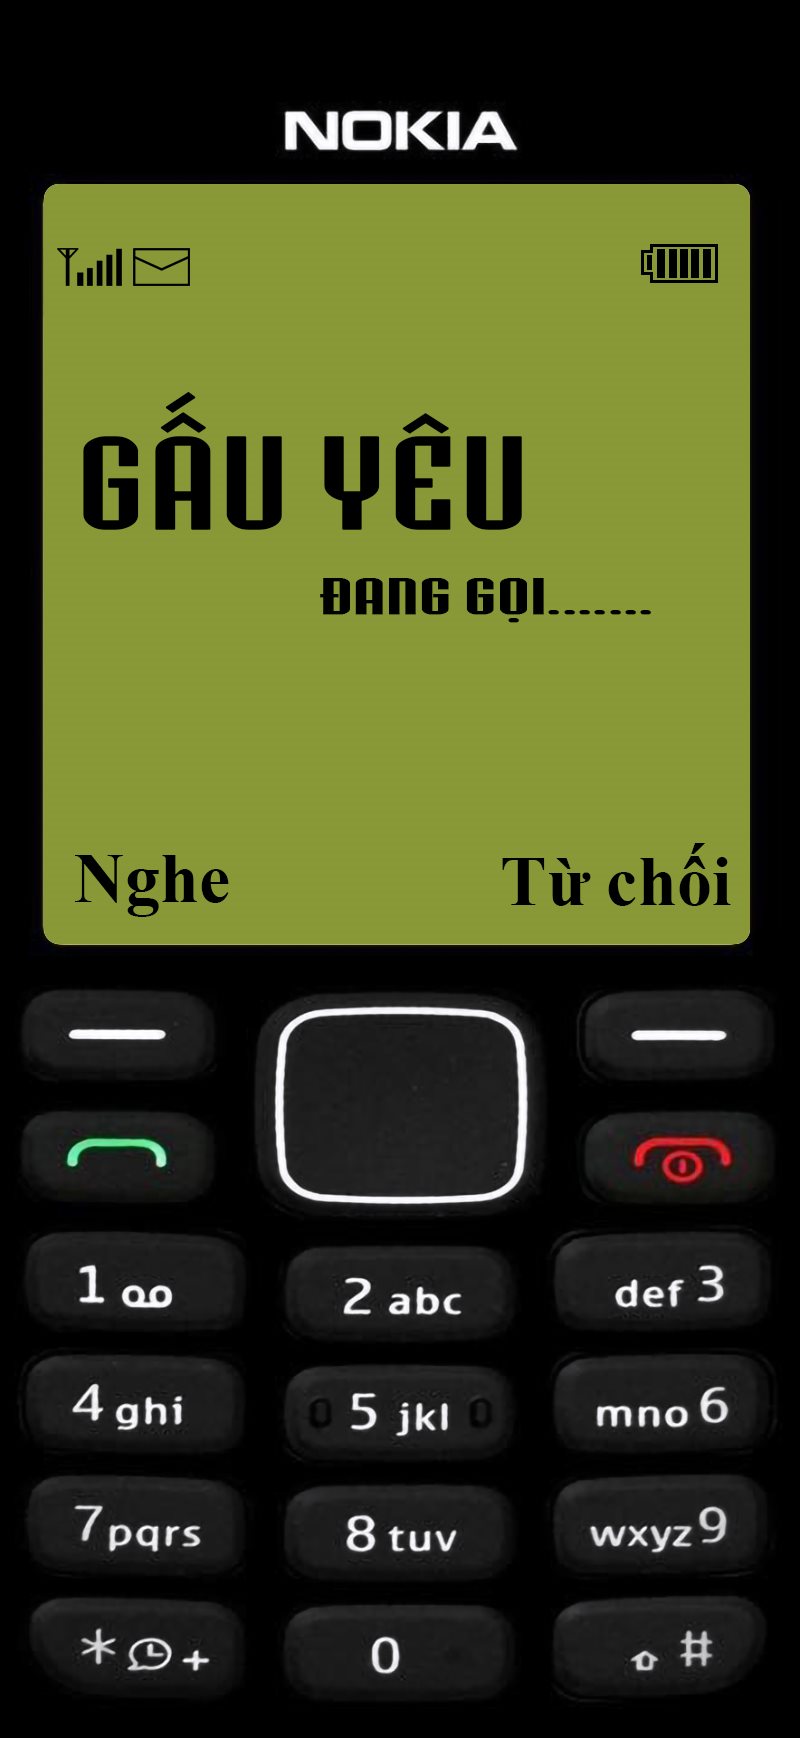 b5-hinh-nen-nokia-1280-cho-samsung-oppo-tren-iphone-anh-nen-nokia-1280-danh-cho-smartphone-dien-thoai-cam-ung.jpg